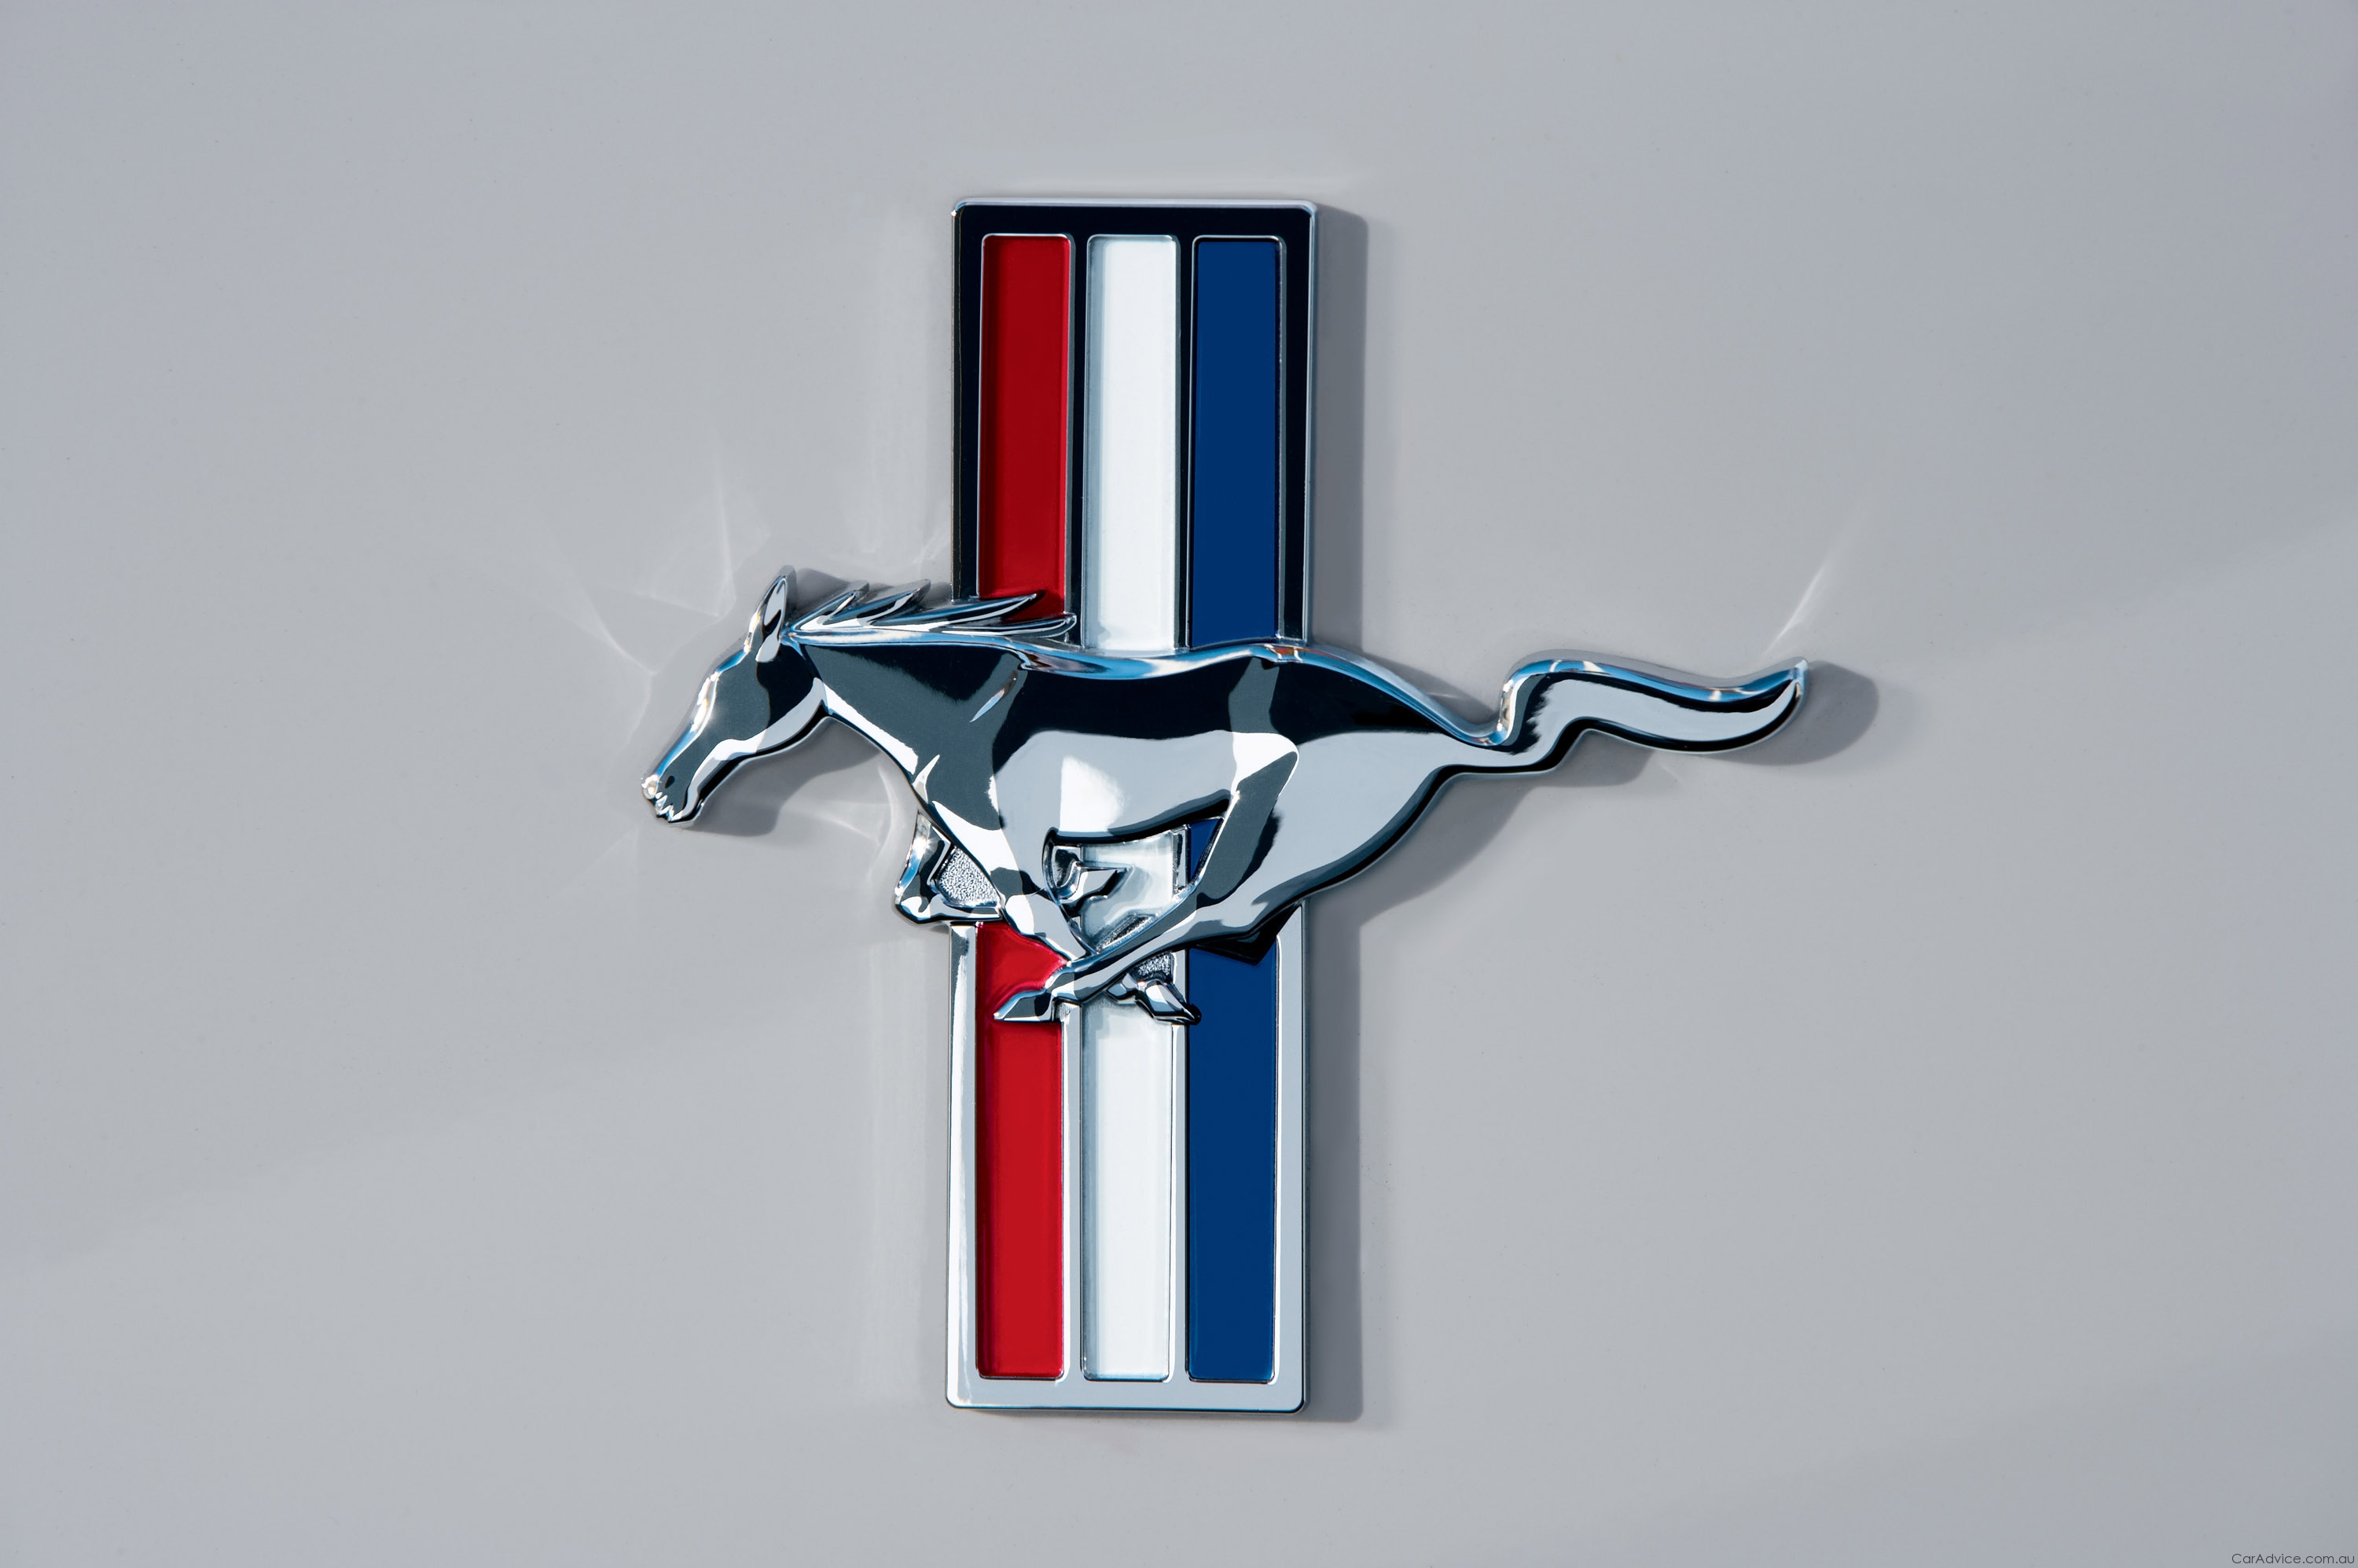 Марка мустанга. Форд Мустанг лого. Форд Мустанг значок. Форд Мустанг логотип лошадь. Машина с эмблемой лошади.